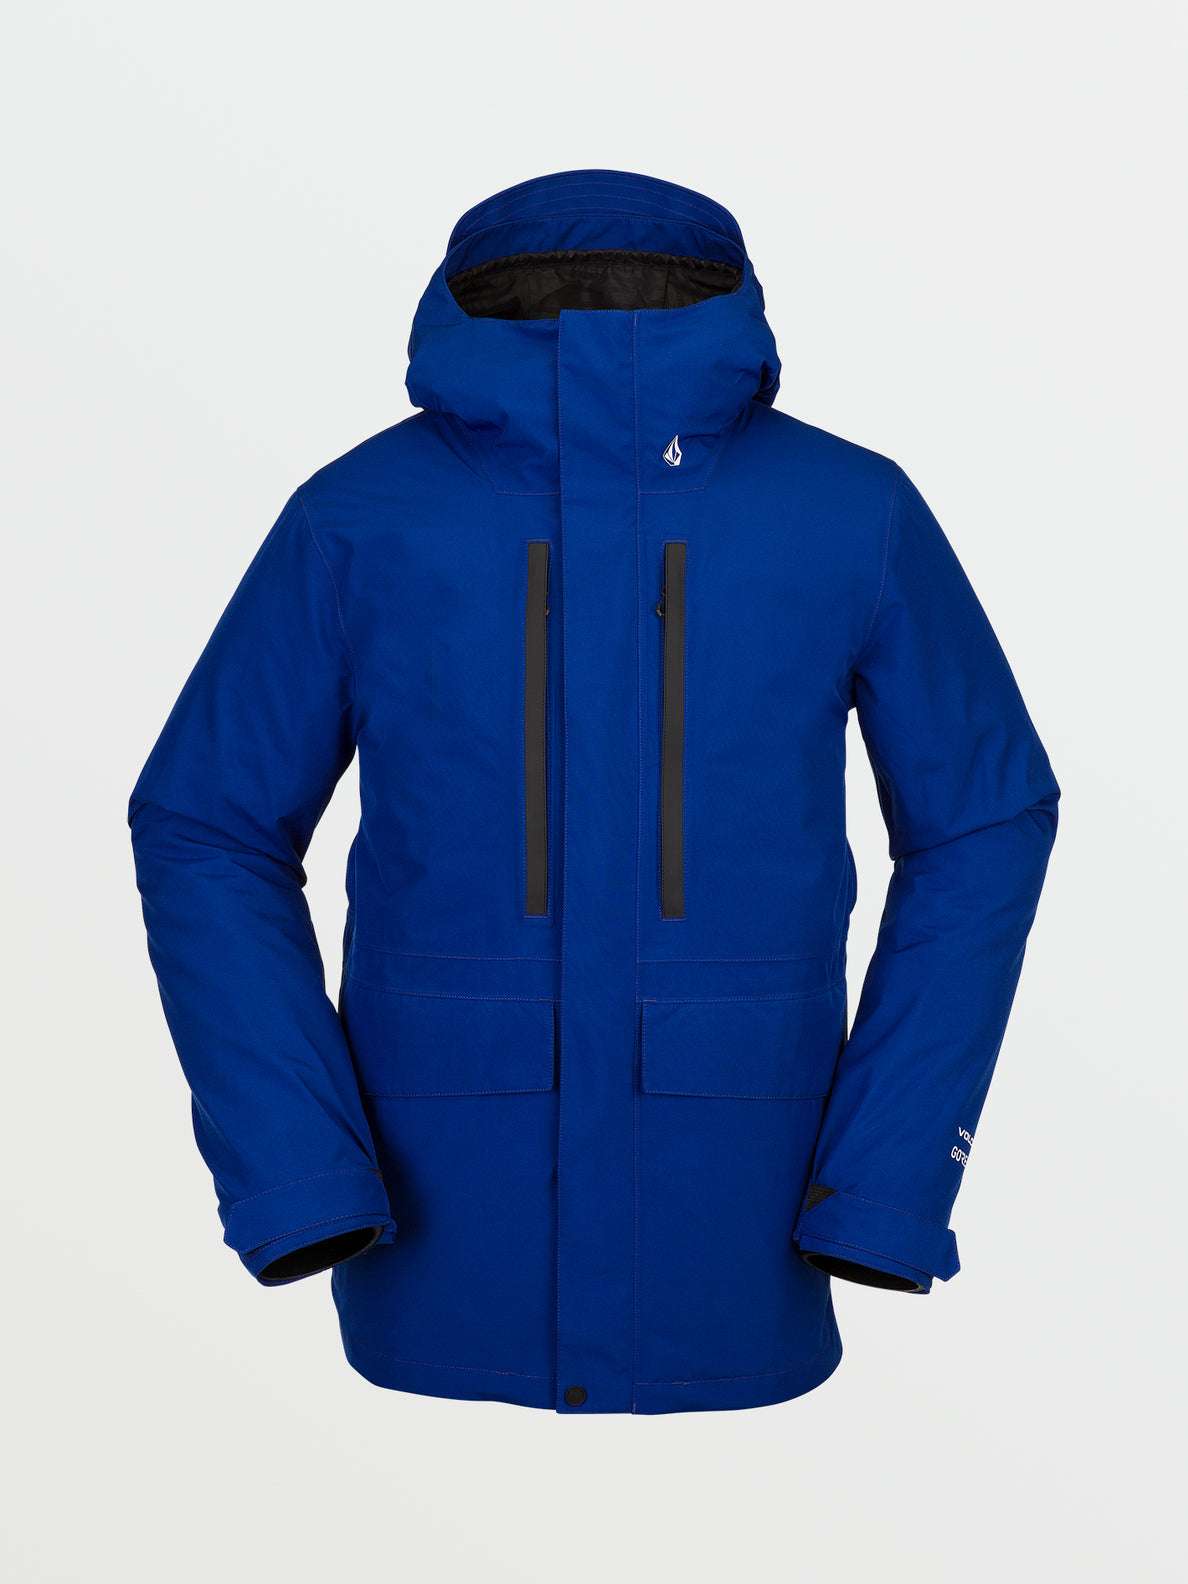 Mens Ten Insulated Gore-Tex Jacket - Bright Blue (G0452204_BBL) [F]